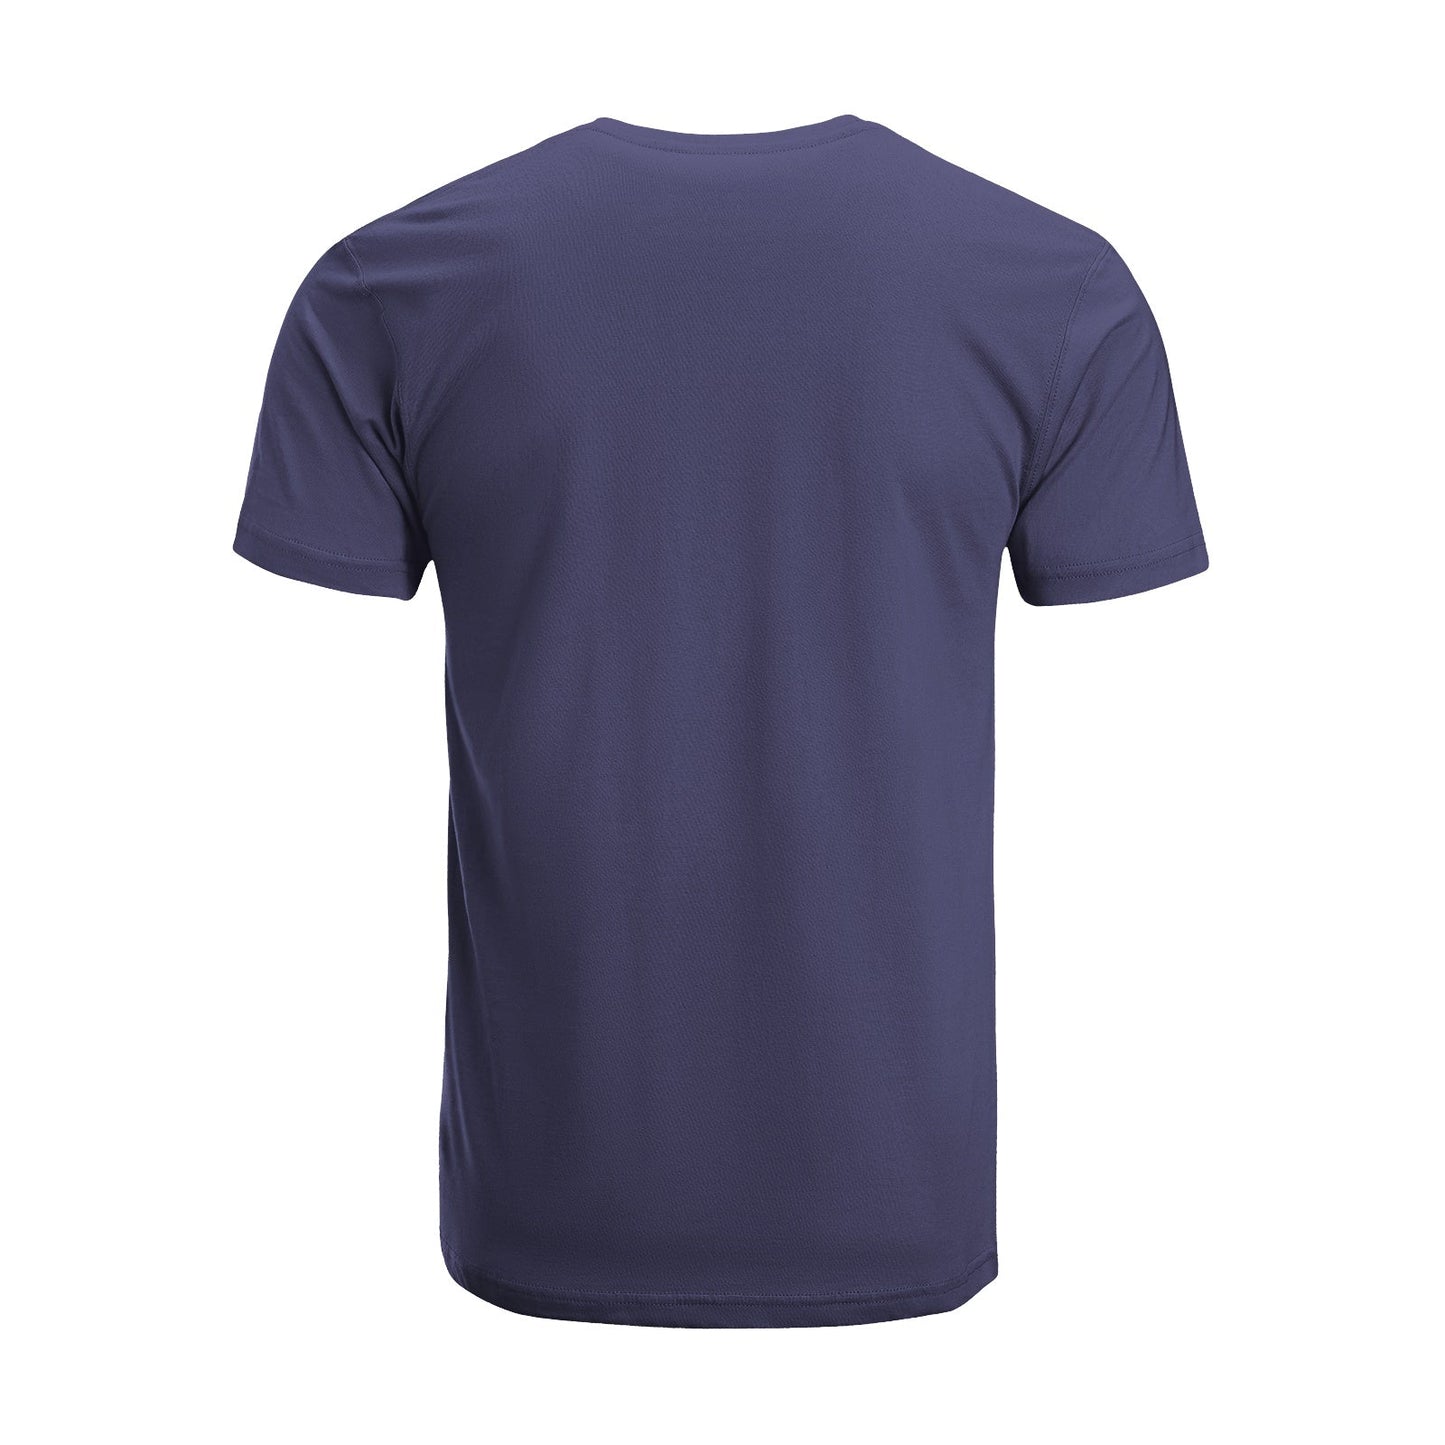 Unisex Short Sleeve Crew Neck Cotton Jersey T-Shirt MOM 41